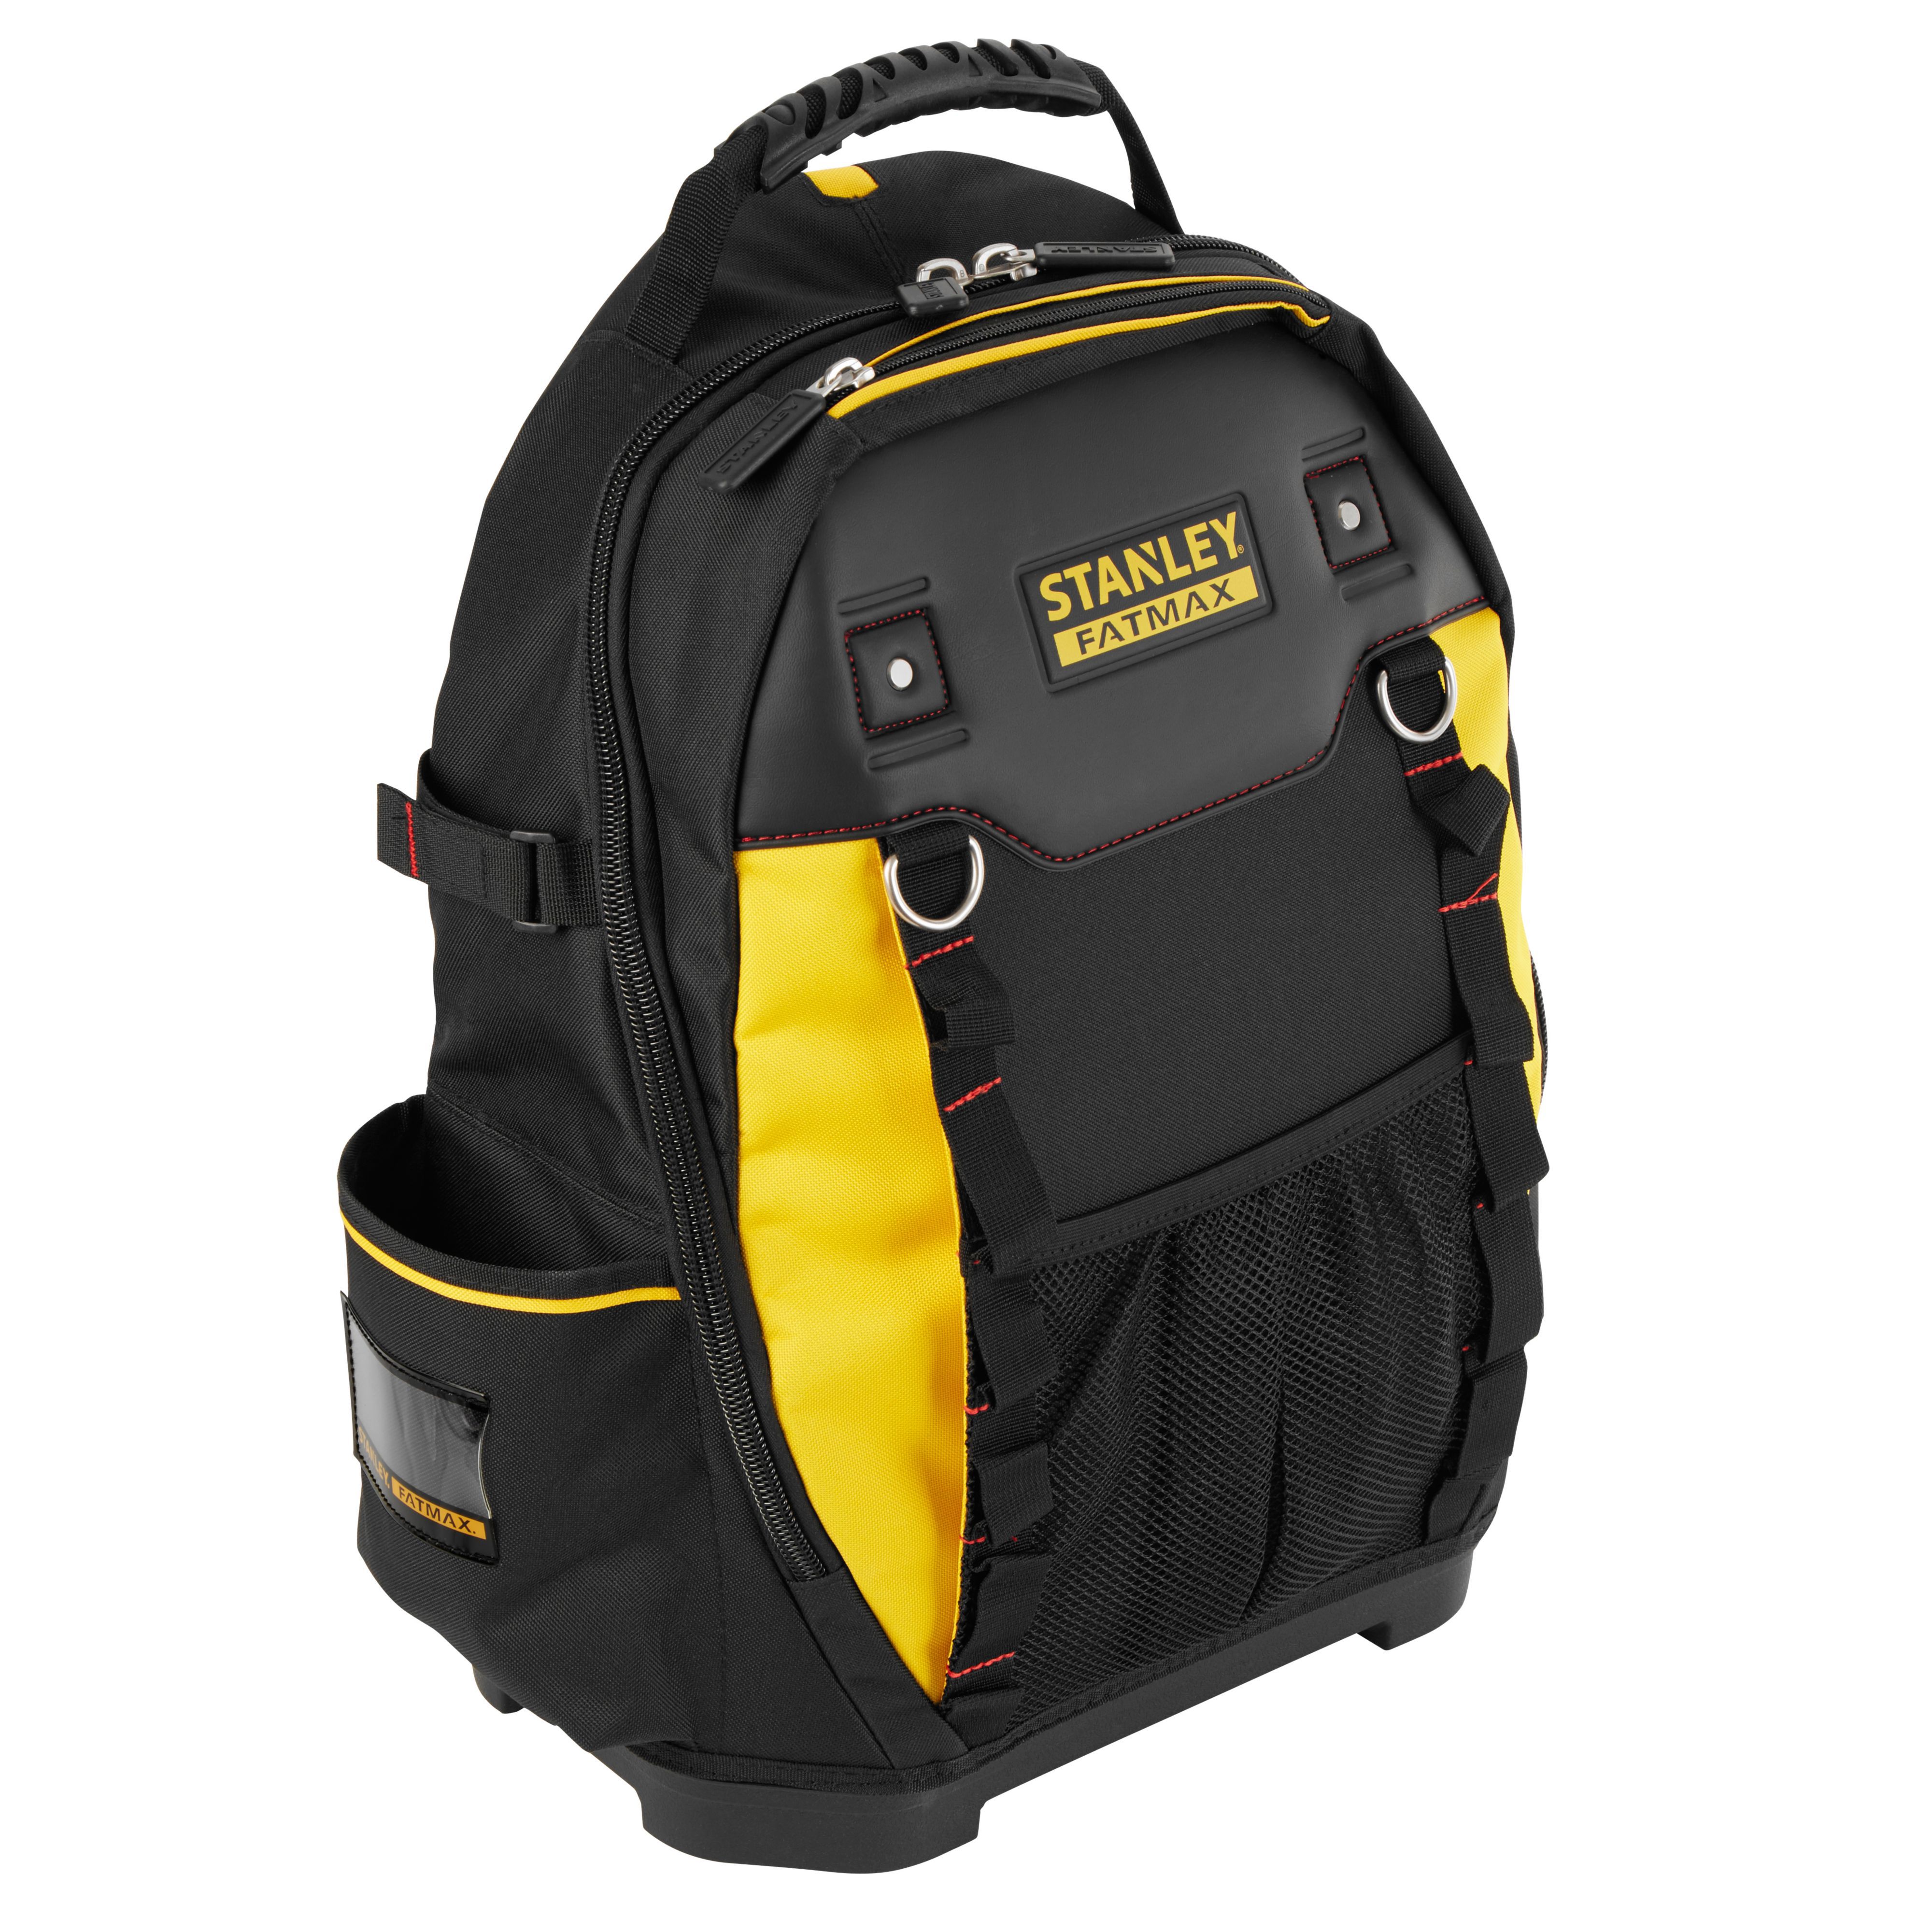 https://media.diy.com/is/image/Kingfisher/stanley-fatmax-tool-backpack~3253561956119_05bq?$MOB_PREV$&$width=618&$height=618